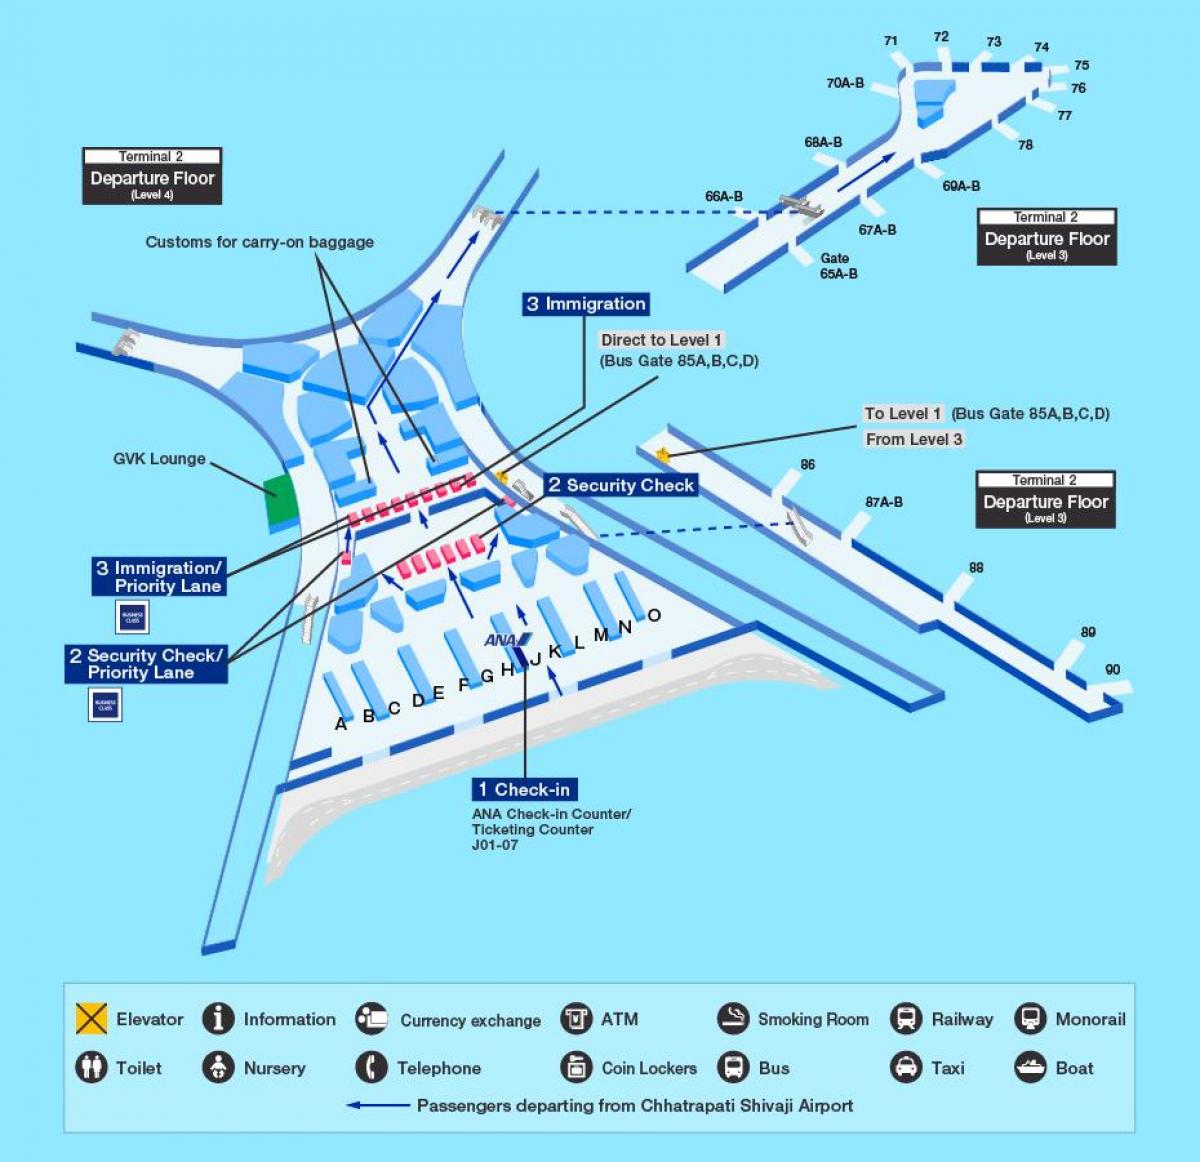 Chhatrapati Shivaji Uluslararası Havaalanı Haritayı göster